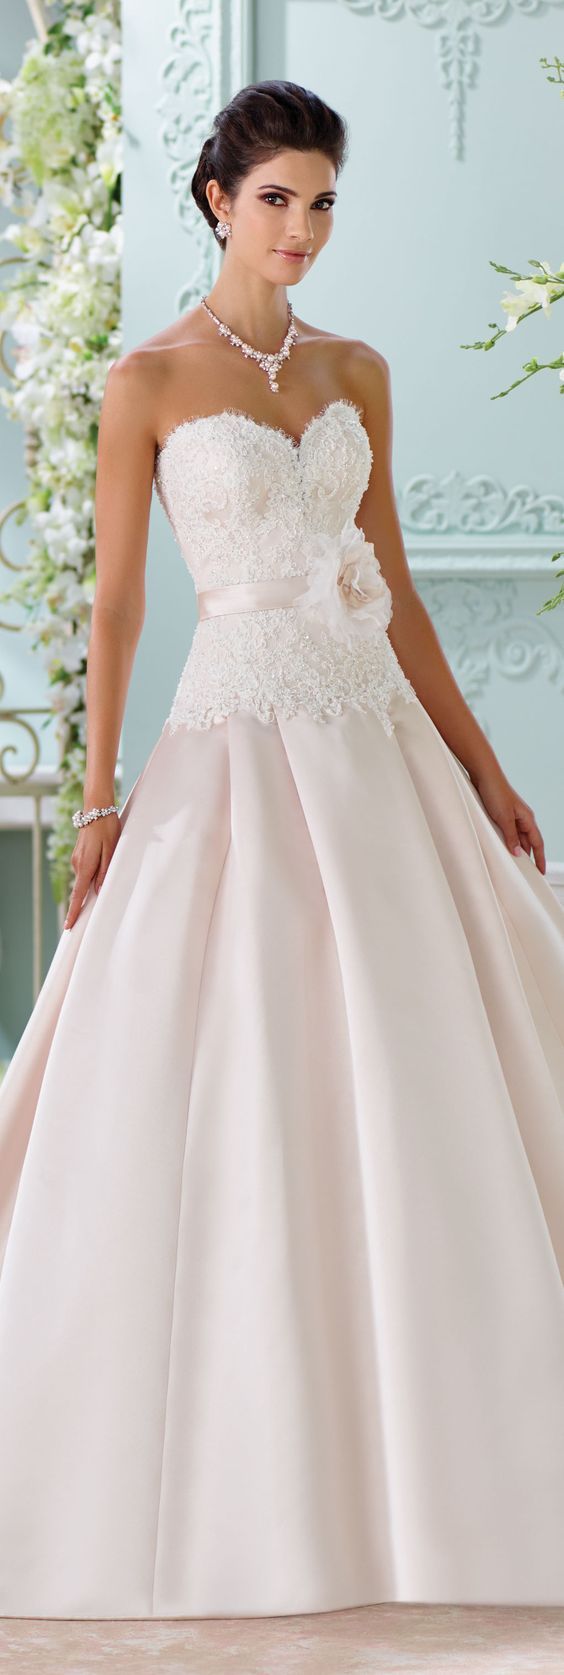 زفاف - Champagne Wedding Dress